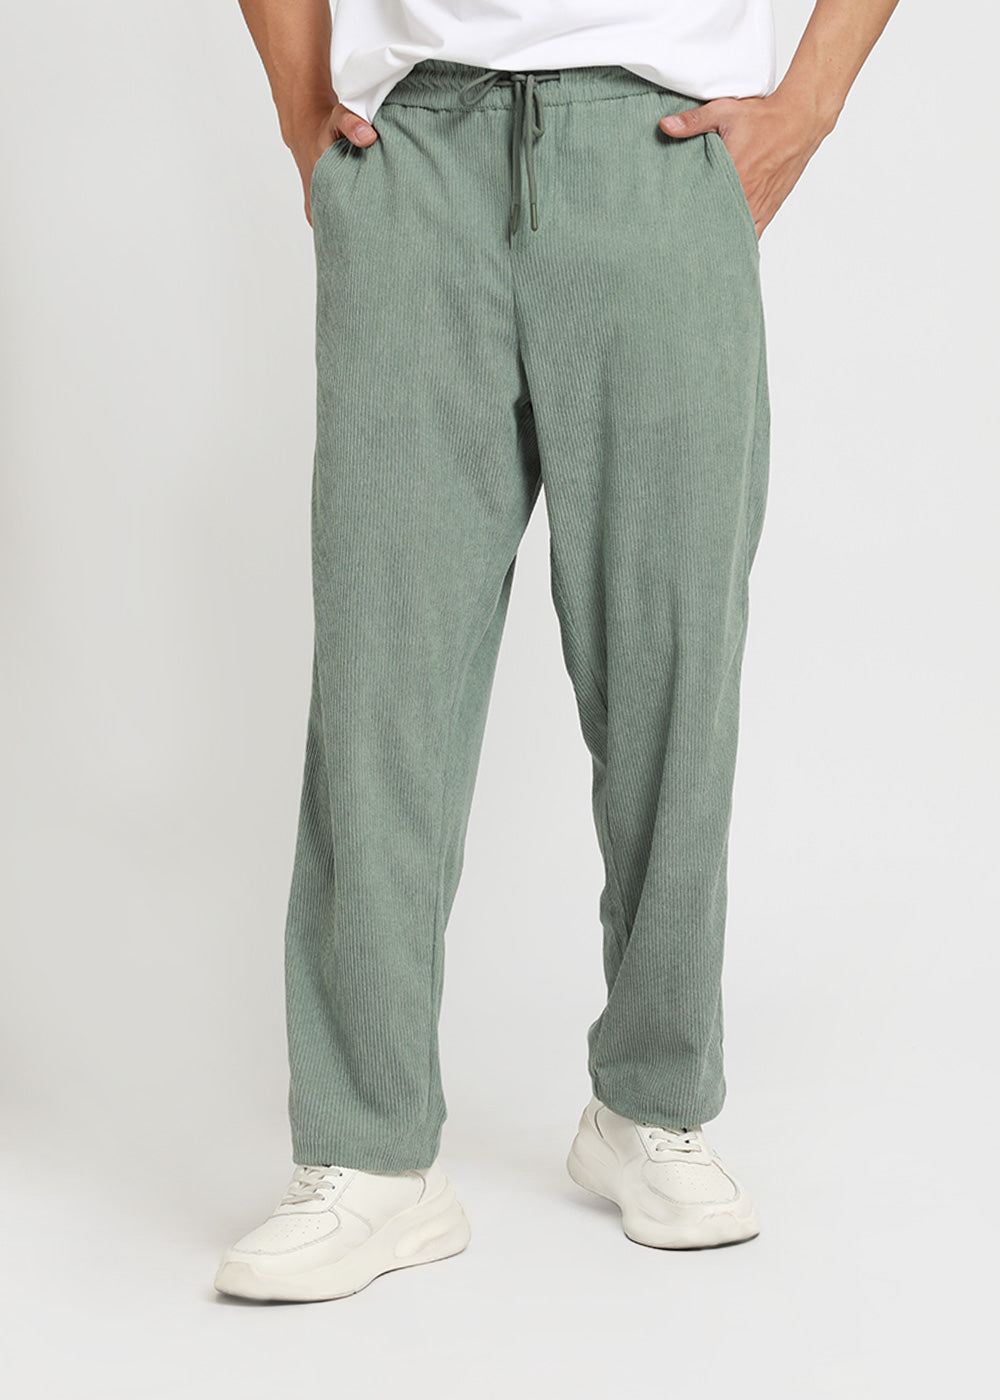 Beryl Green Corduroy Pants